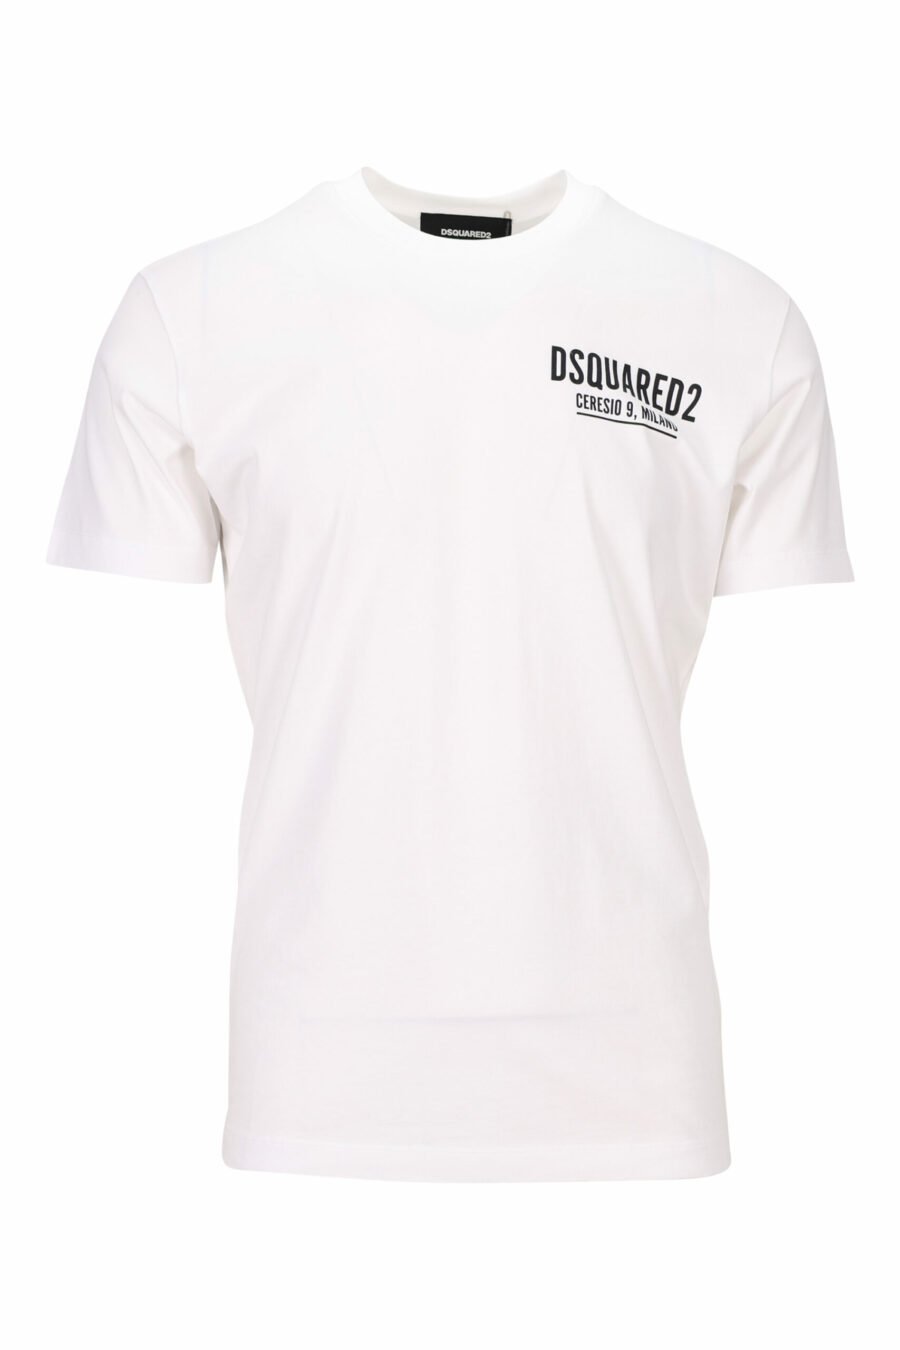 Camiseta blanca con minilogo "ceresio 9, milano" - 8054148505059 scaled